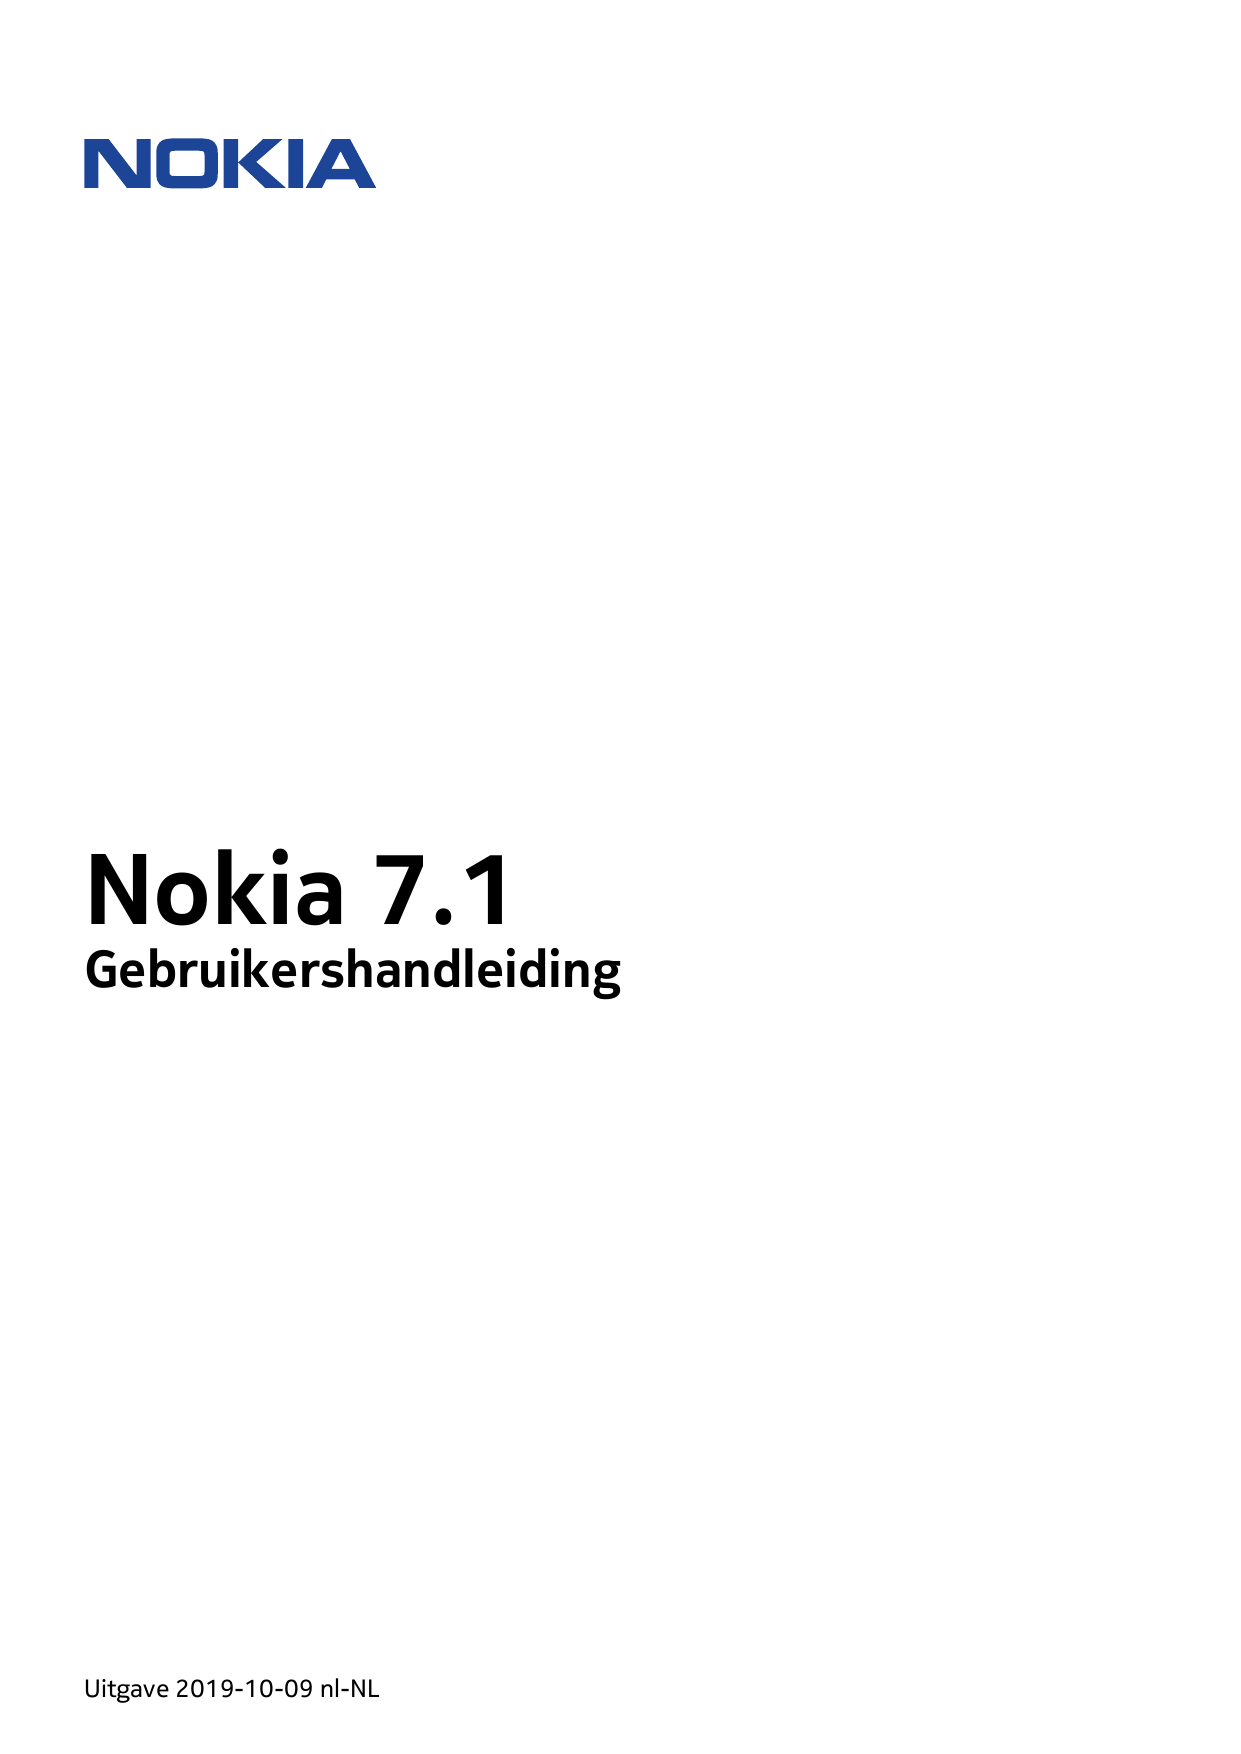 Nokia 7.1GebruikershandleidingUitgave 2019-10-09 nl-NL